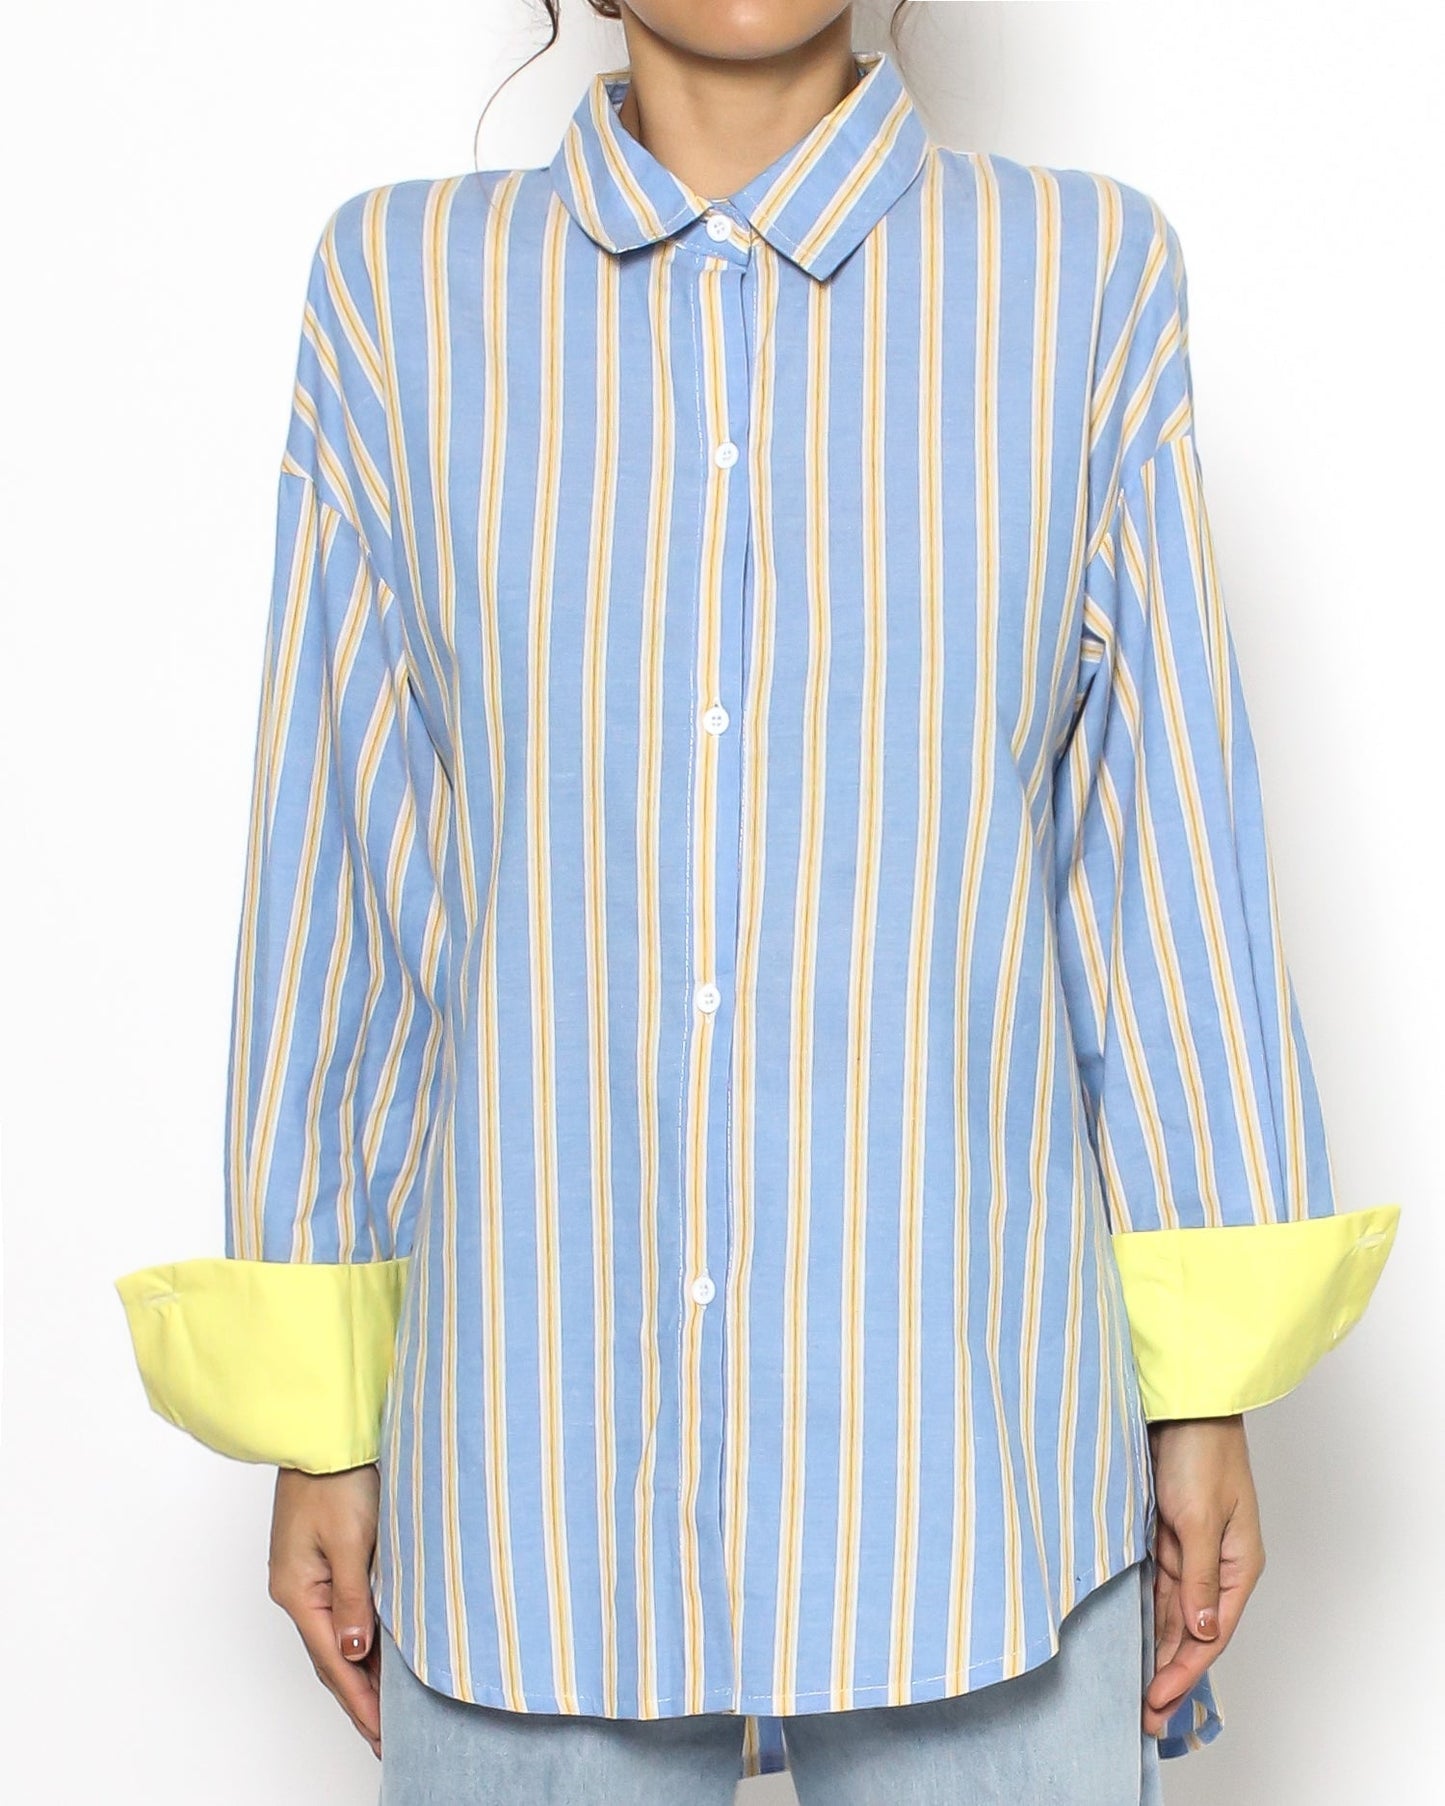 blue & yellow stripes w/ bright yellow cuffs shirt *pre-order*